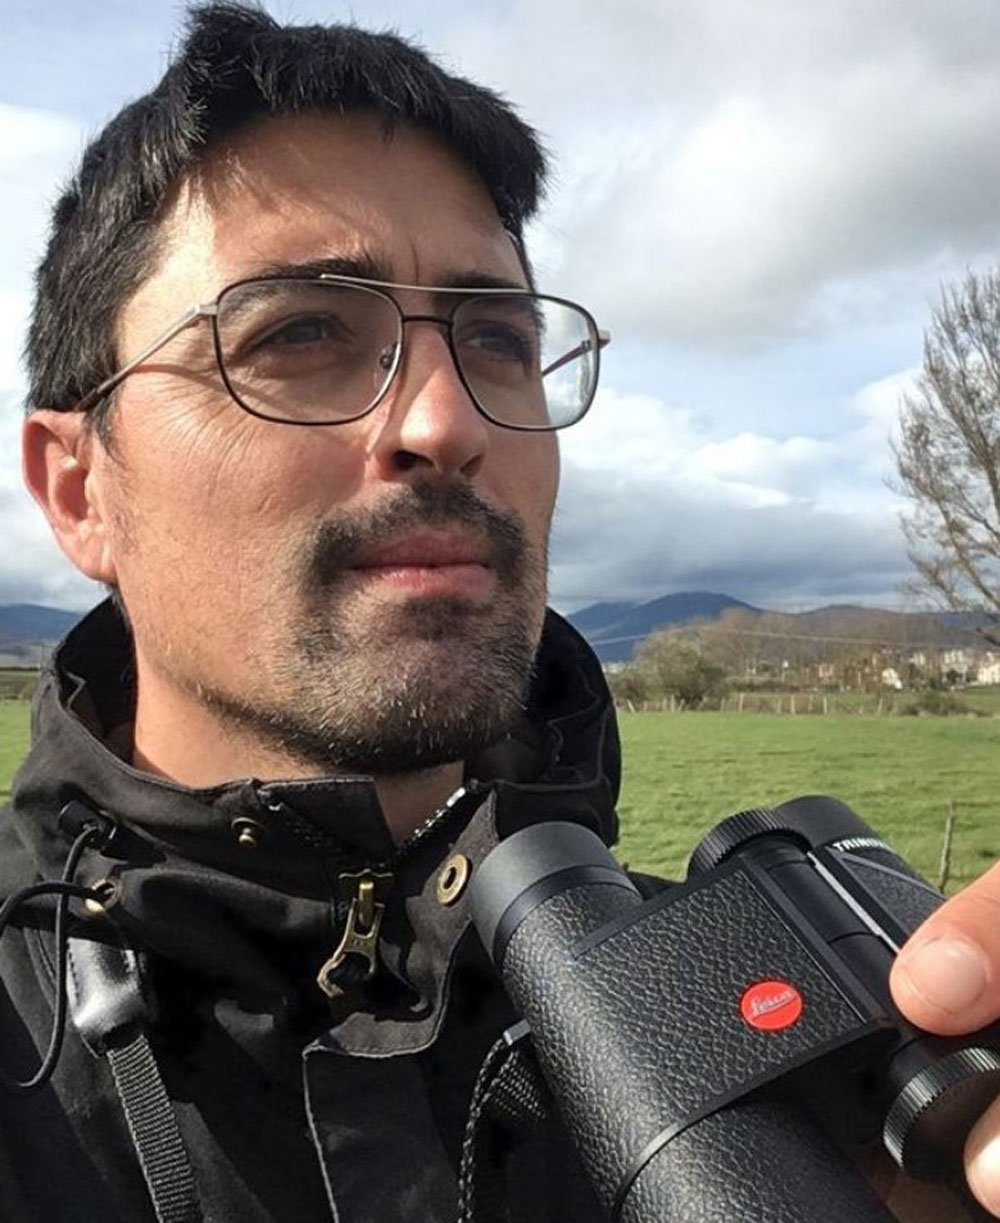 Leica Trinovid HD Plus durable pair of binoculars that will last a lifetime